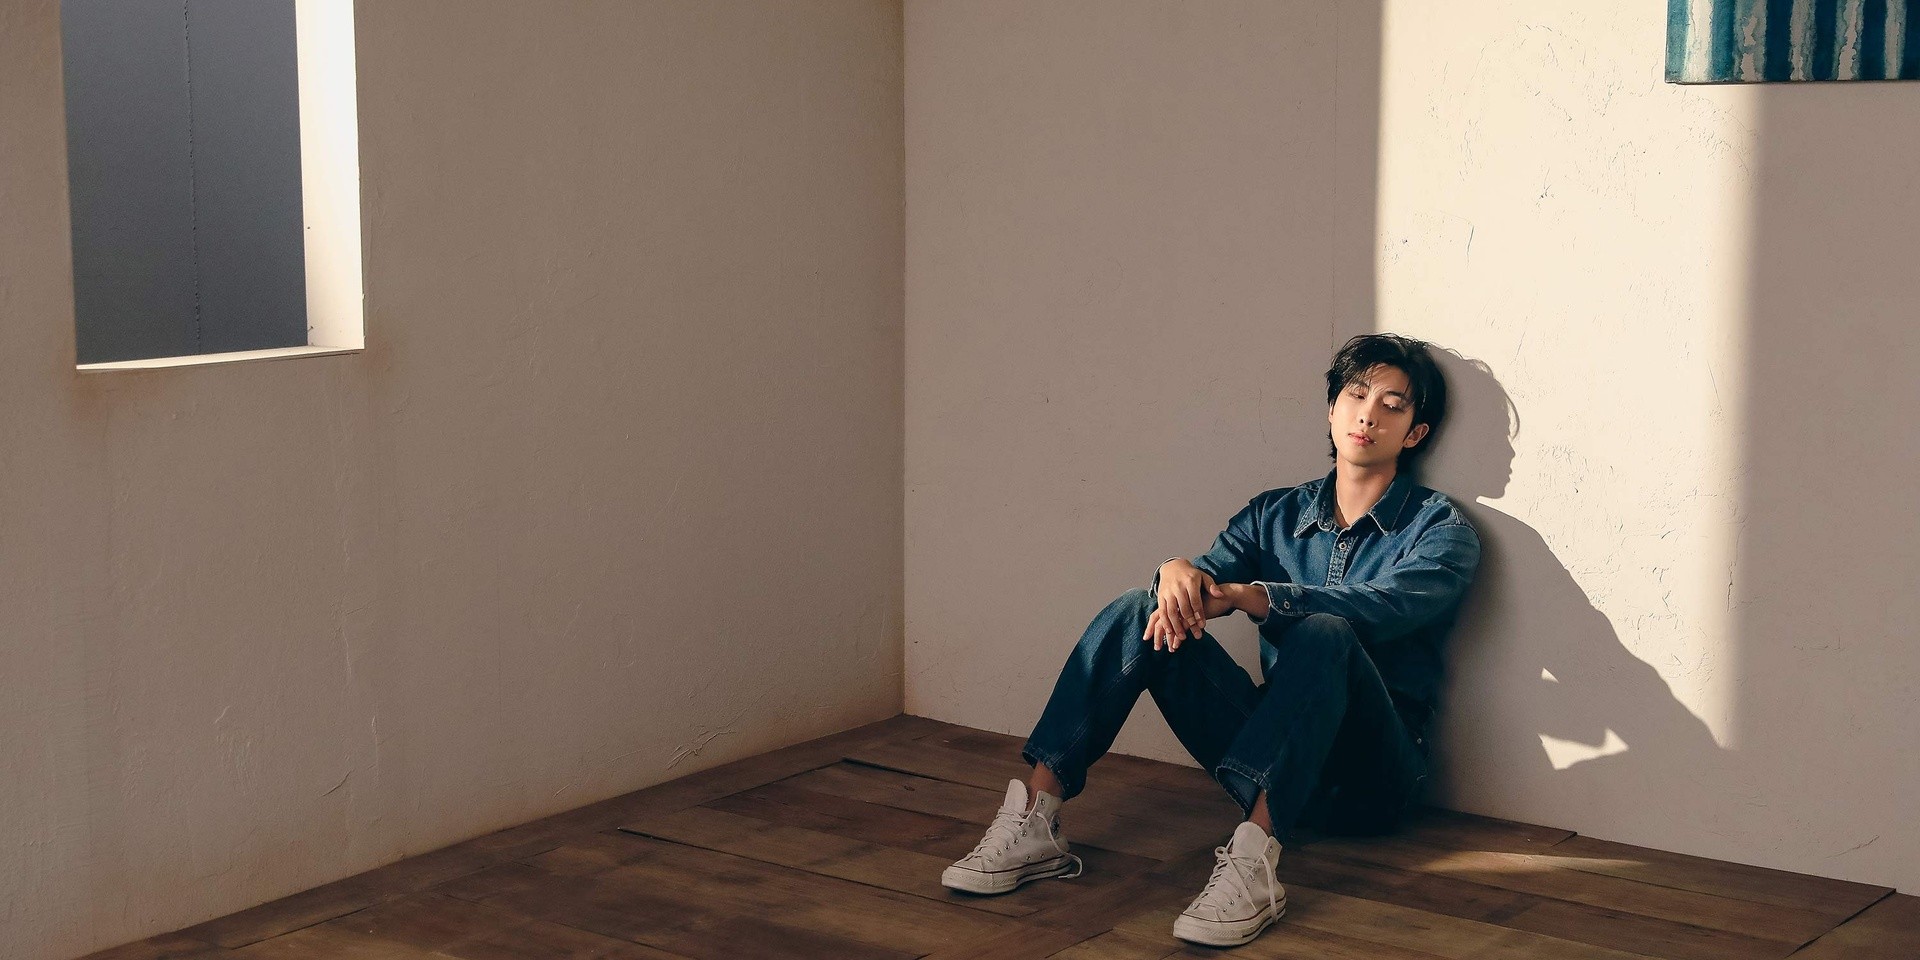 BTS' RM reveals his diary in new solo album 'Indigo' — listen